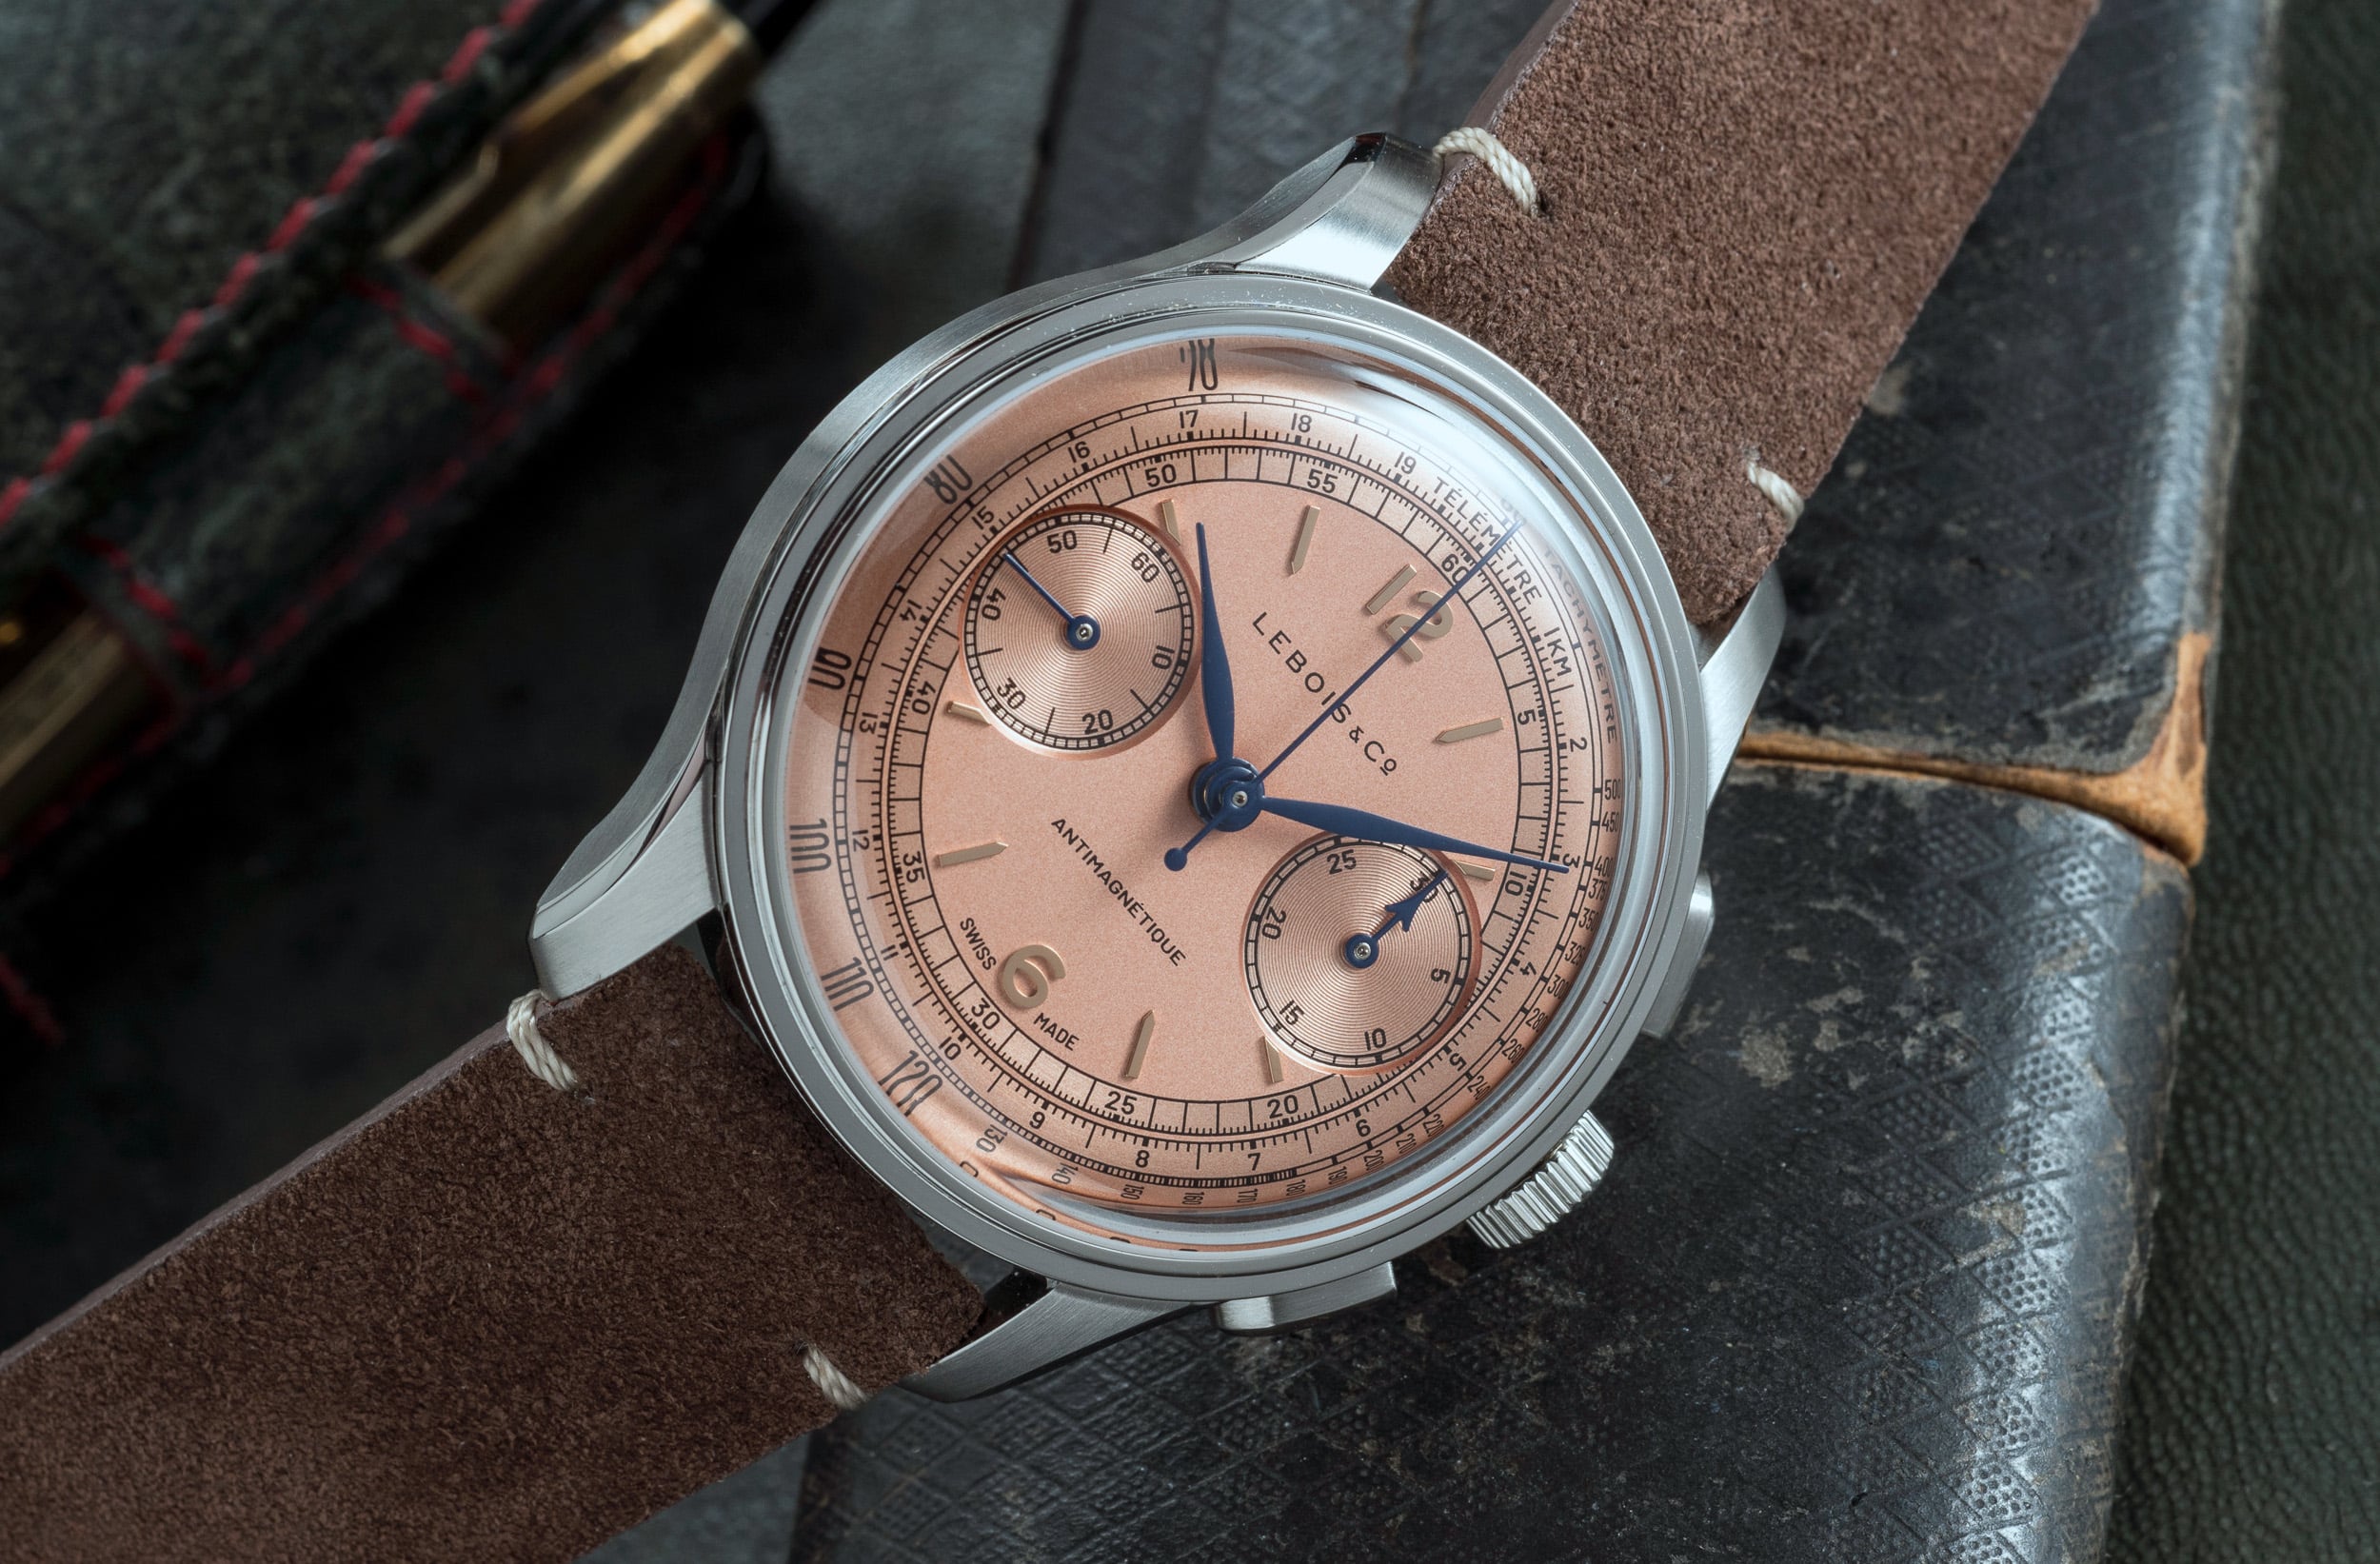 Lebois & Co Heritage Chronograph Ref 324.478 Prototype 